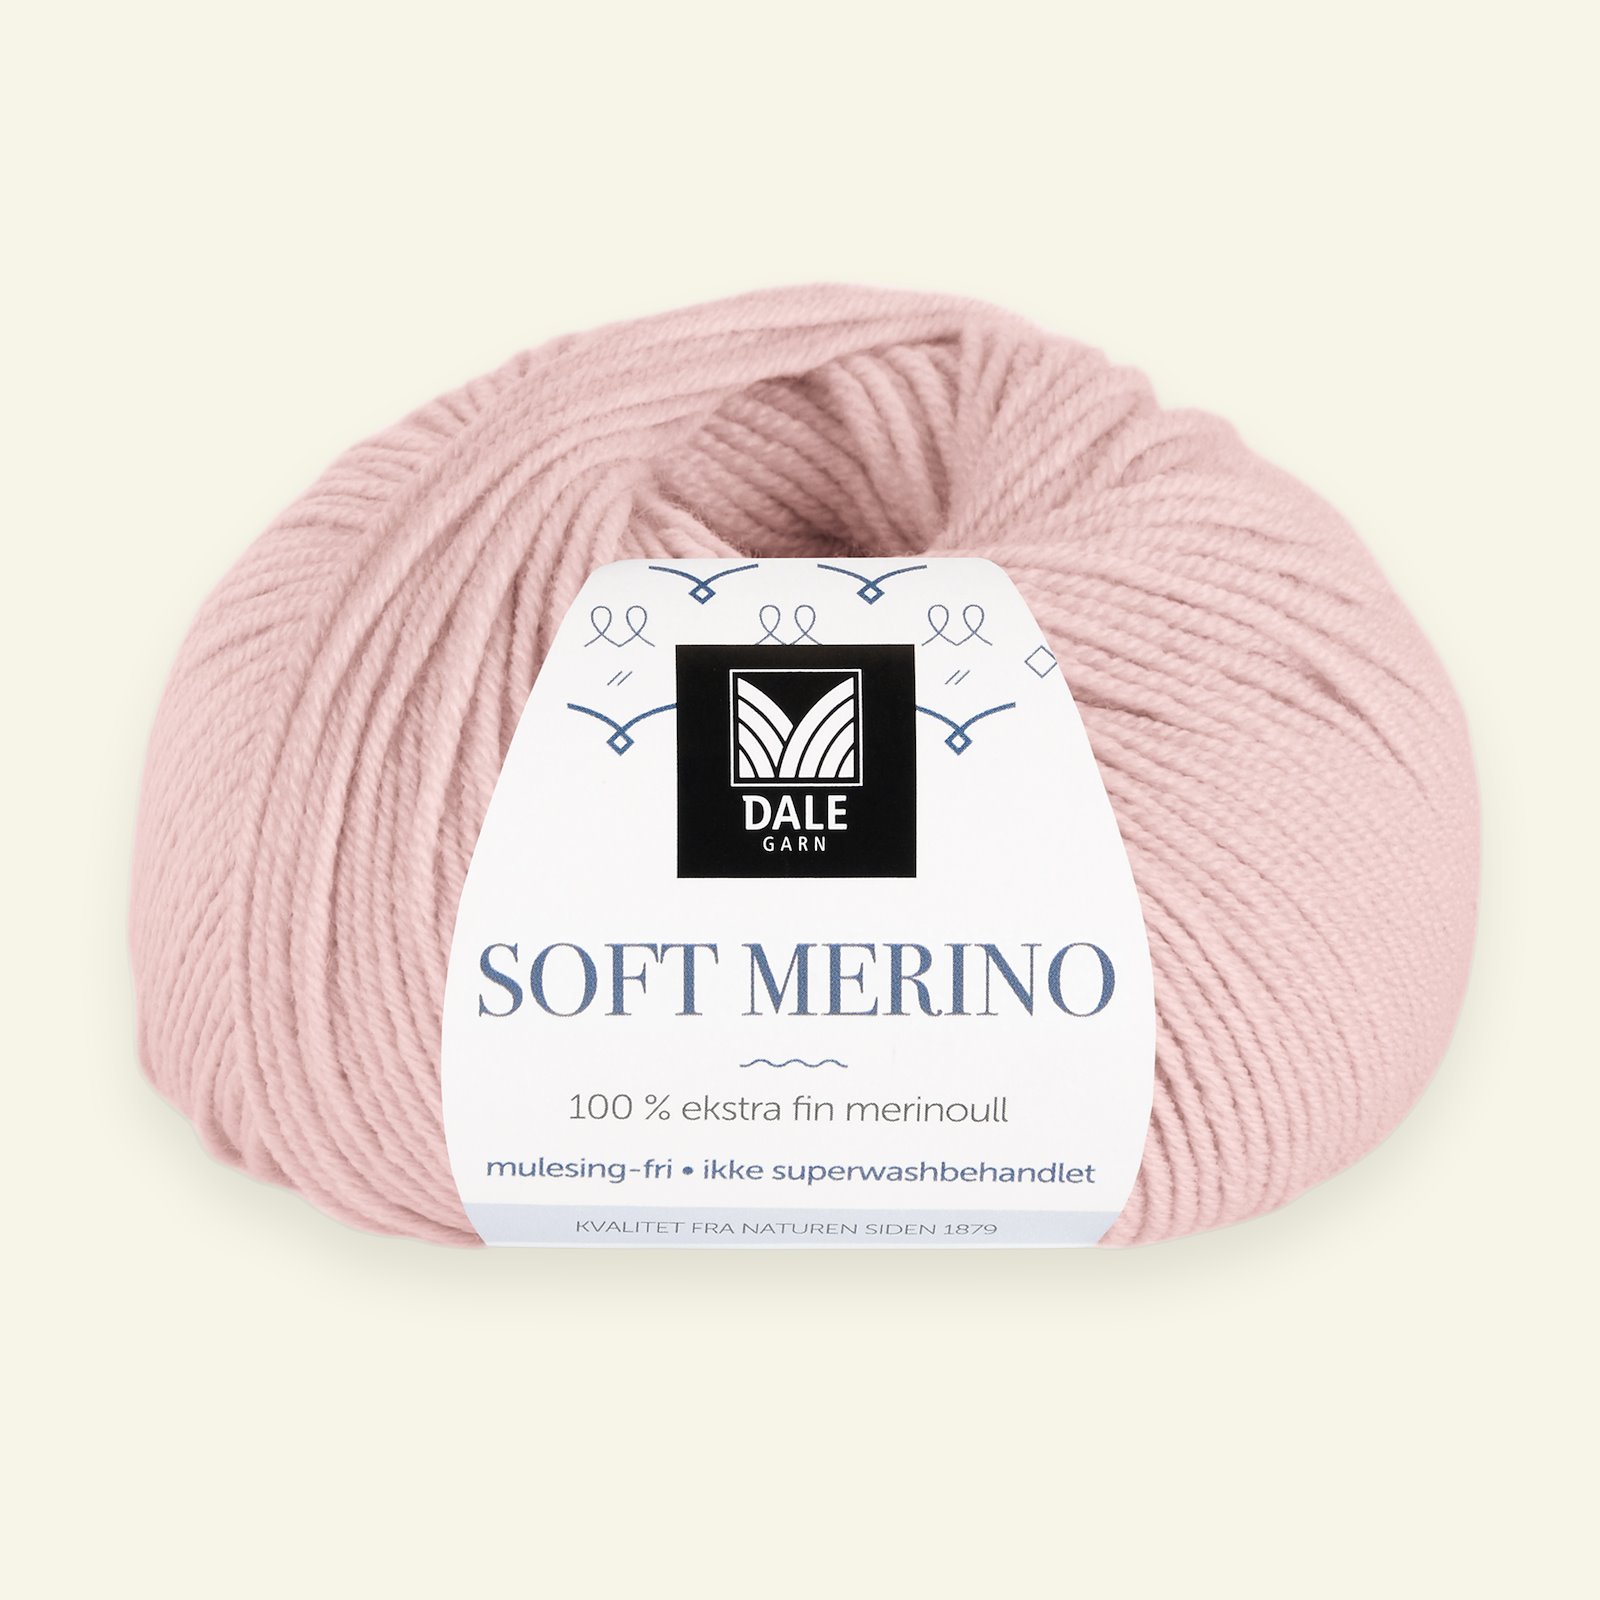 Dale Garn, 100% ekstra fint merinogarn "Soft Merino", Rosa 90000339_pack